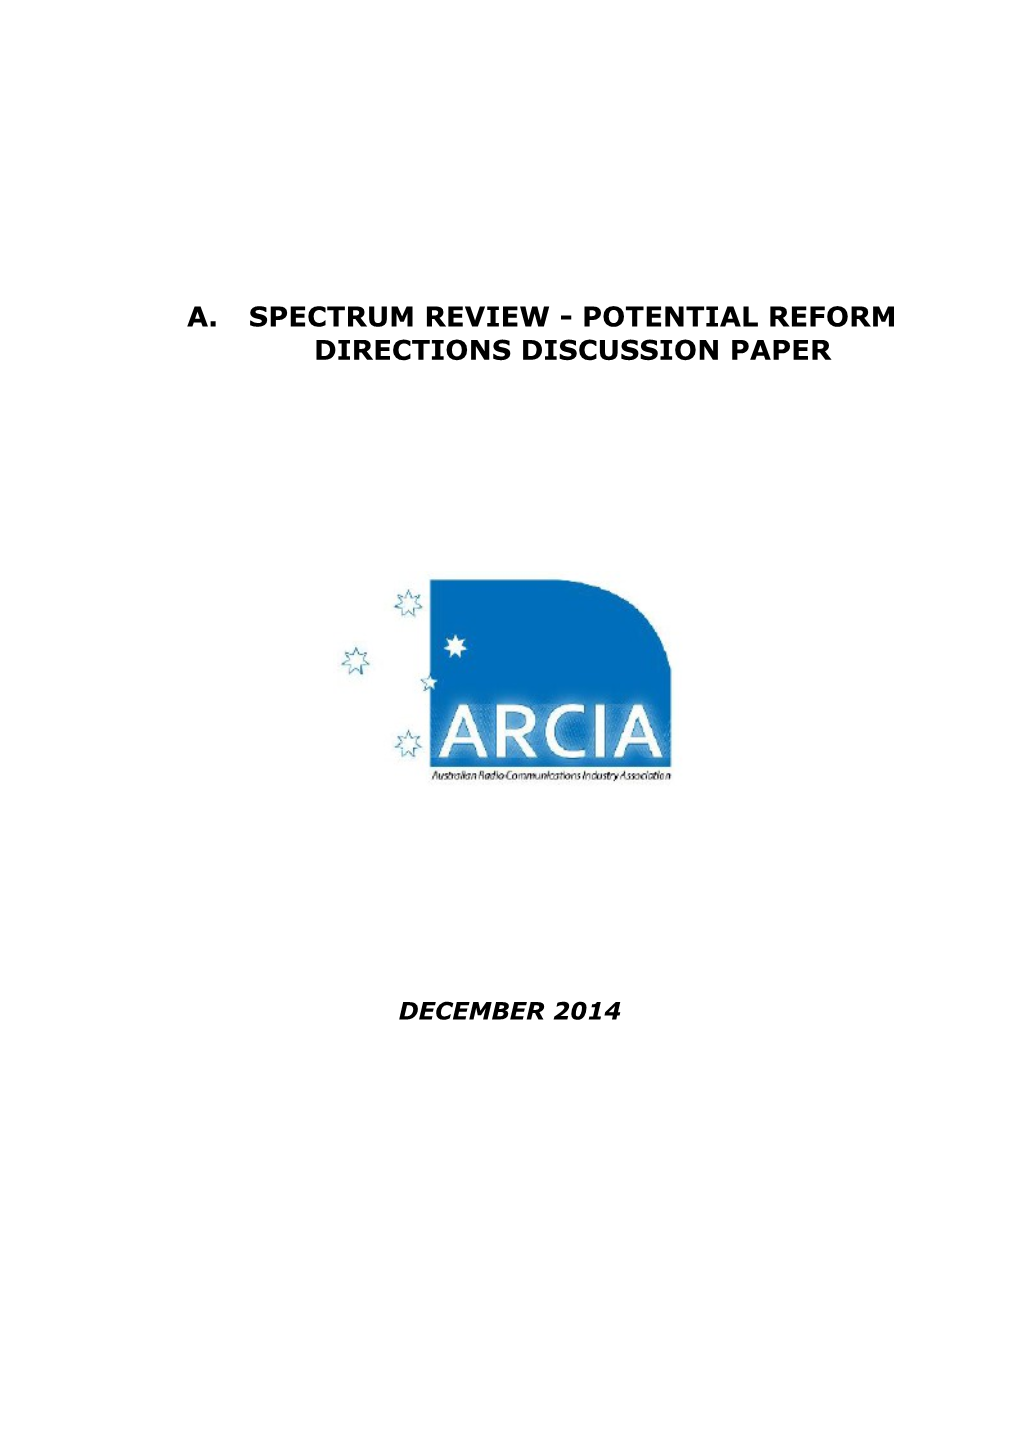 Spectrum Review - Potential Reform Directions Discussion Paper